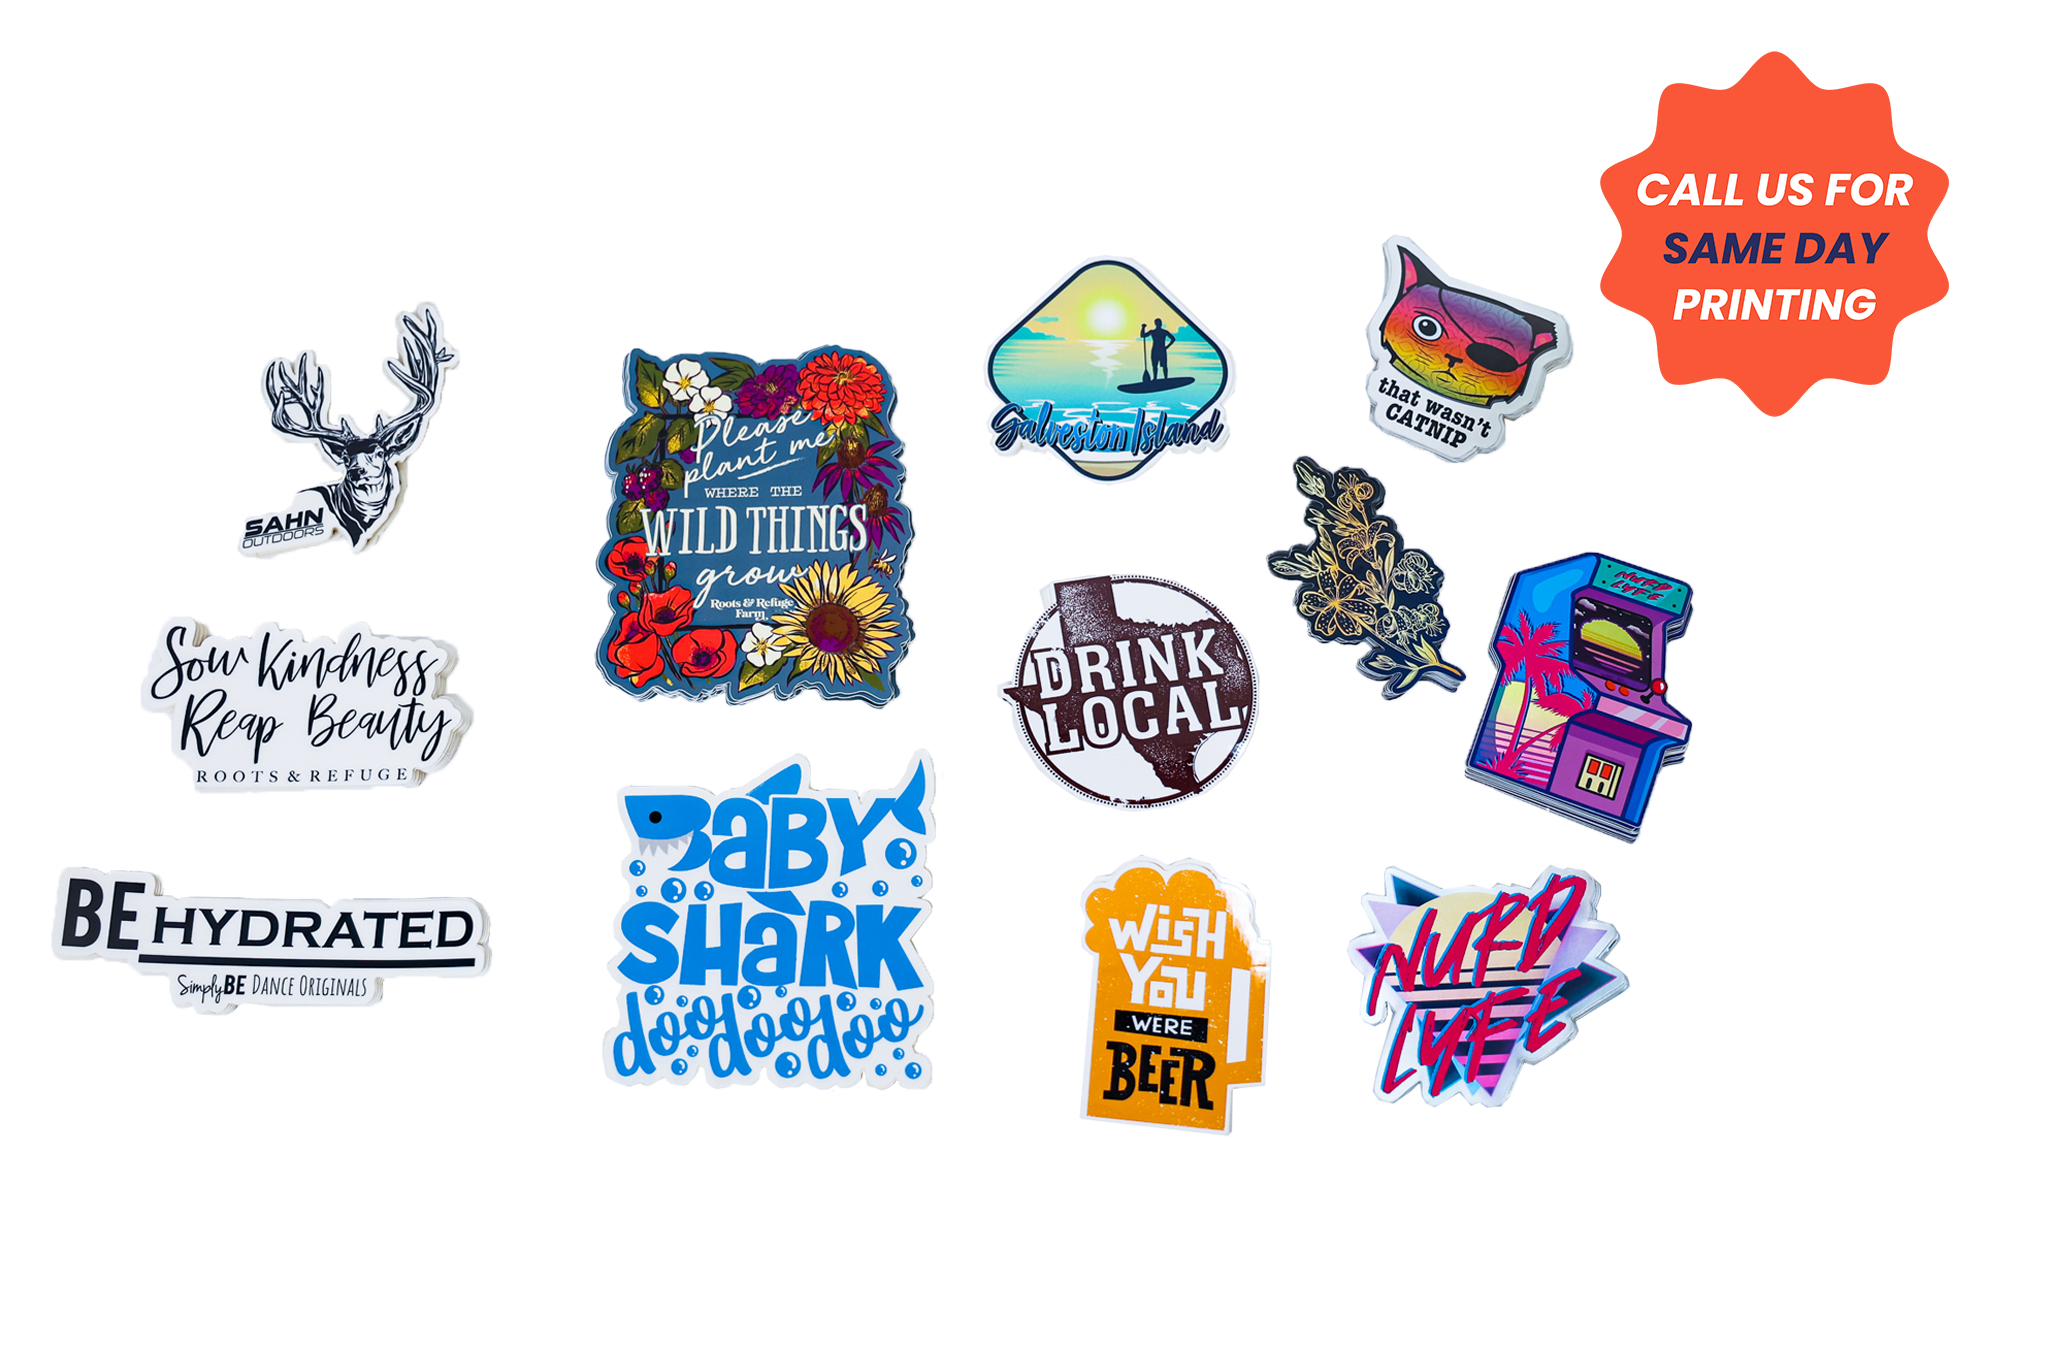 Custom Sticker Makers: Print Custom Stickers Online